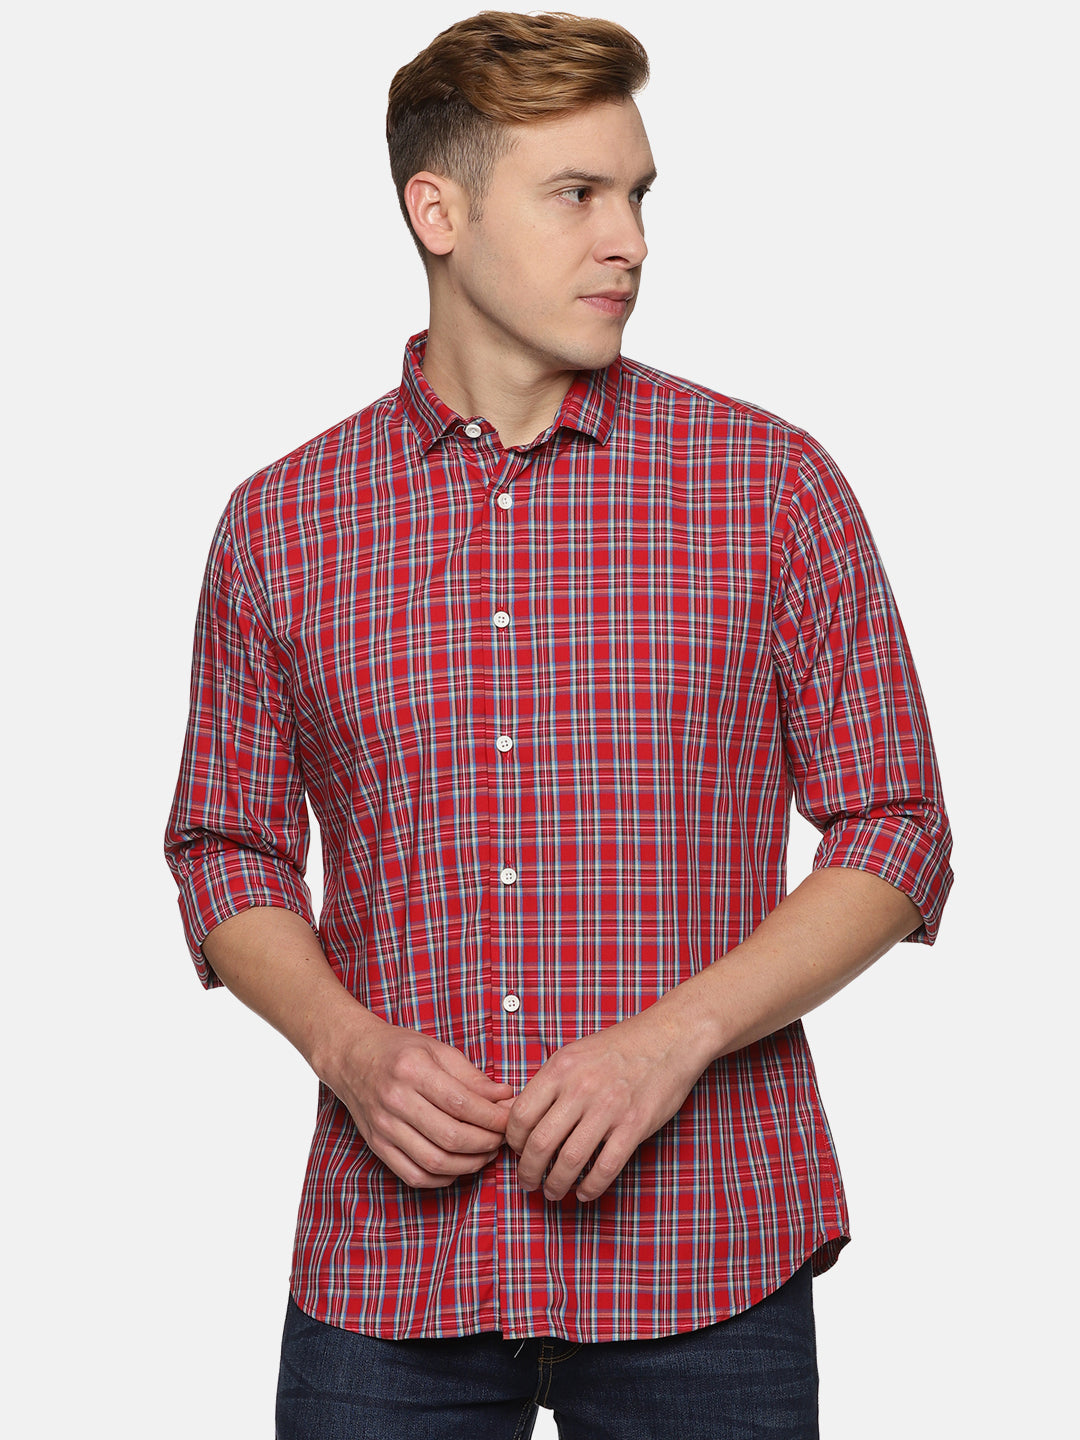 Men Red Checkered Slim Fit Casual Shirt, Men's Full Sleeve Cotton Shirt